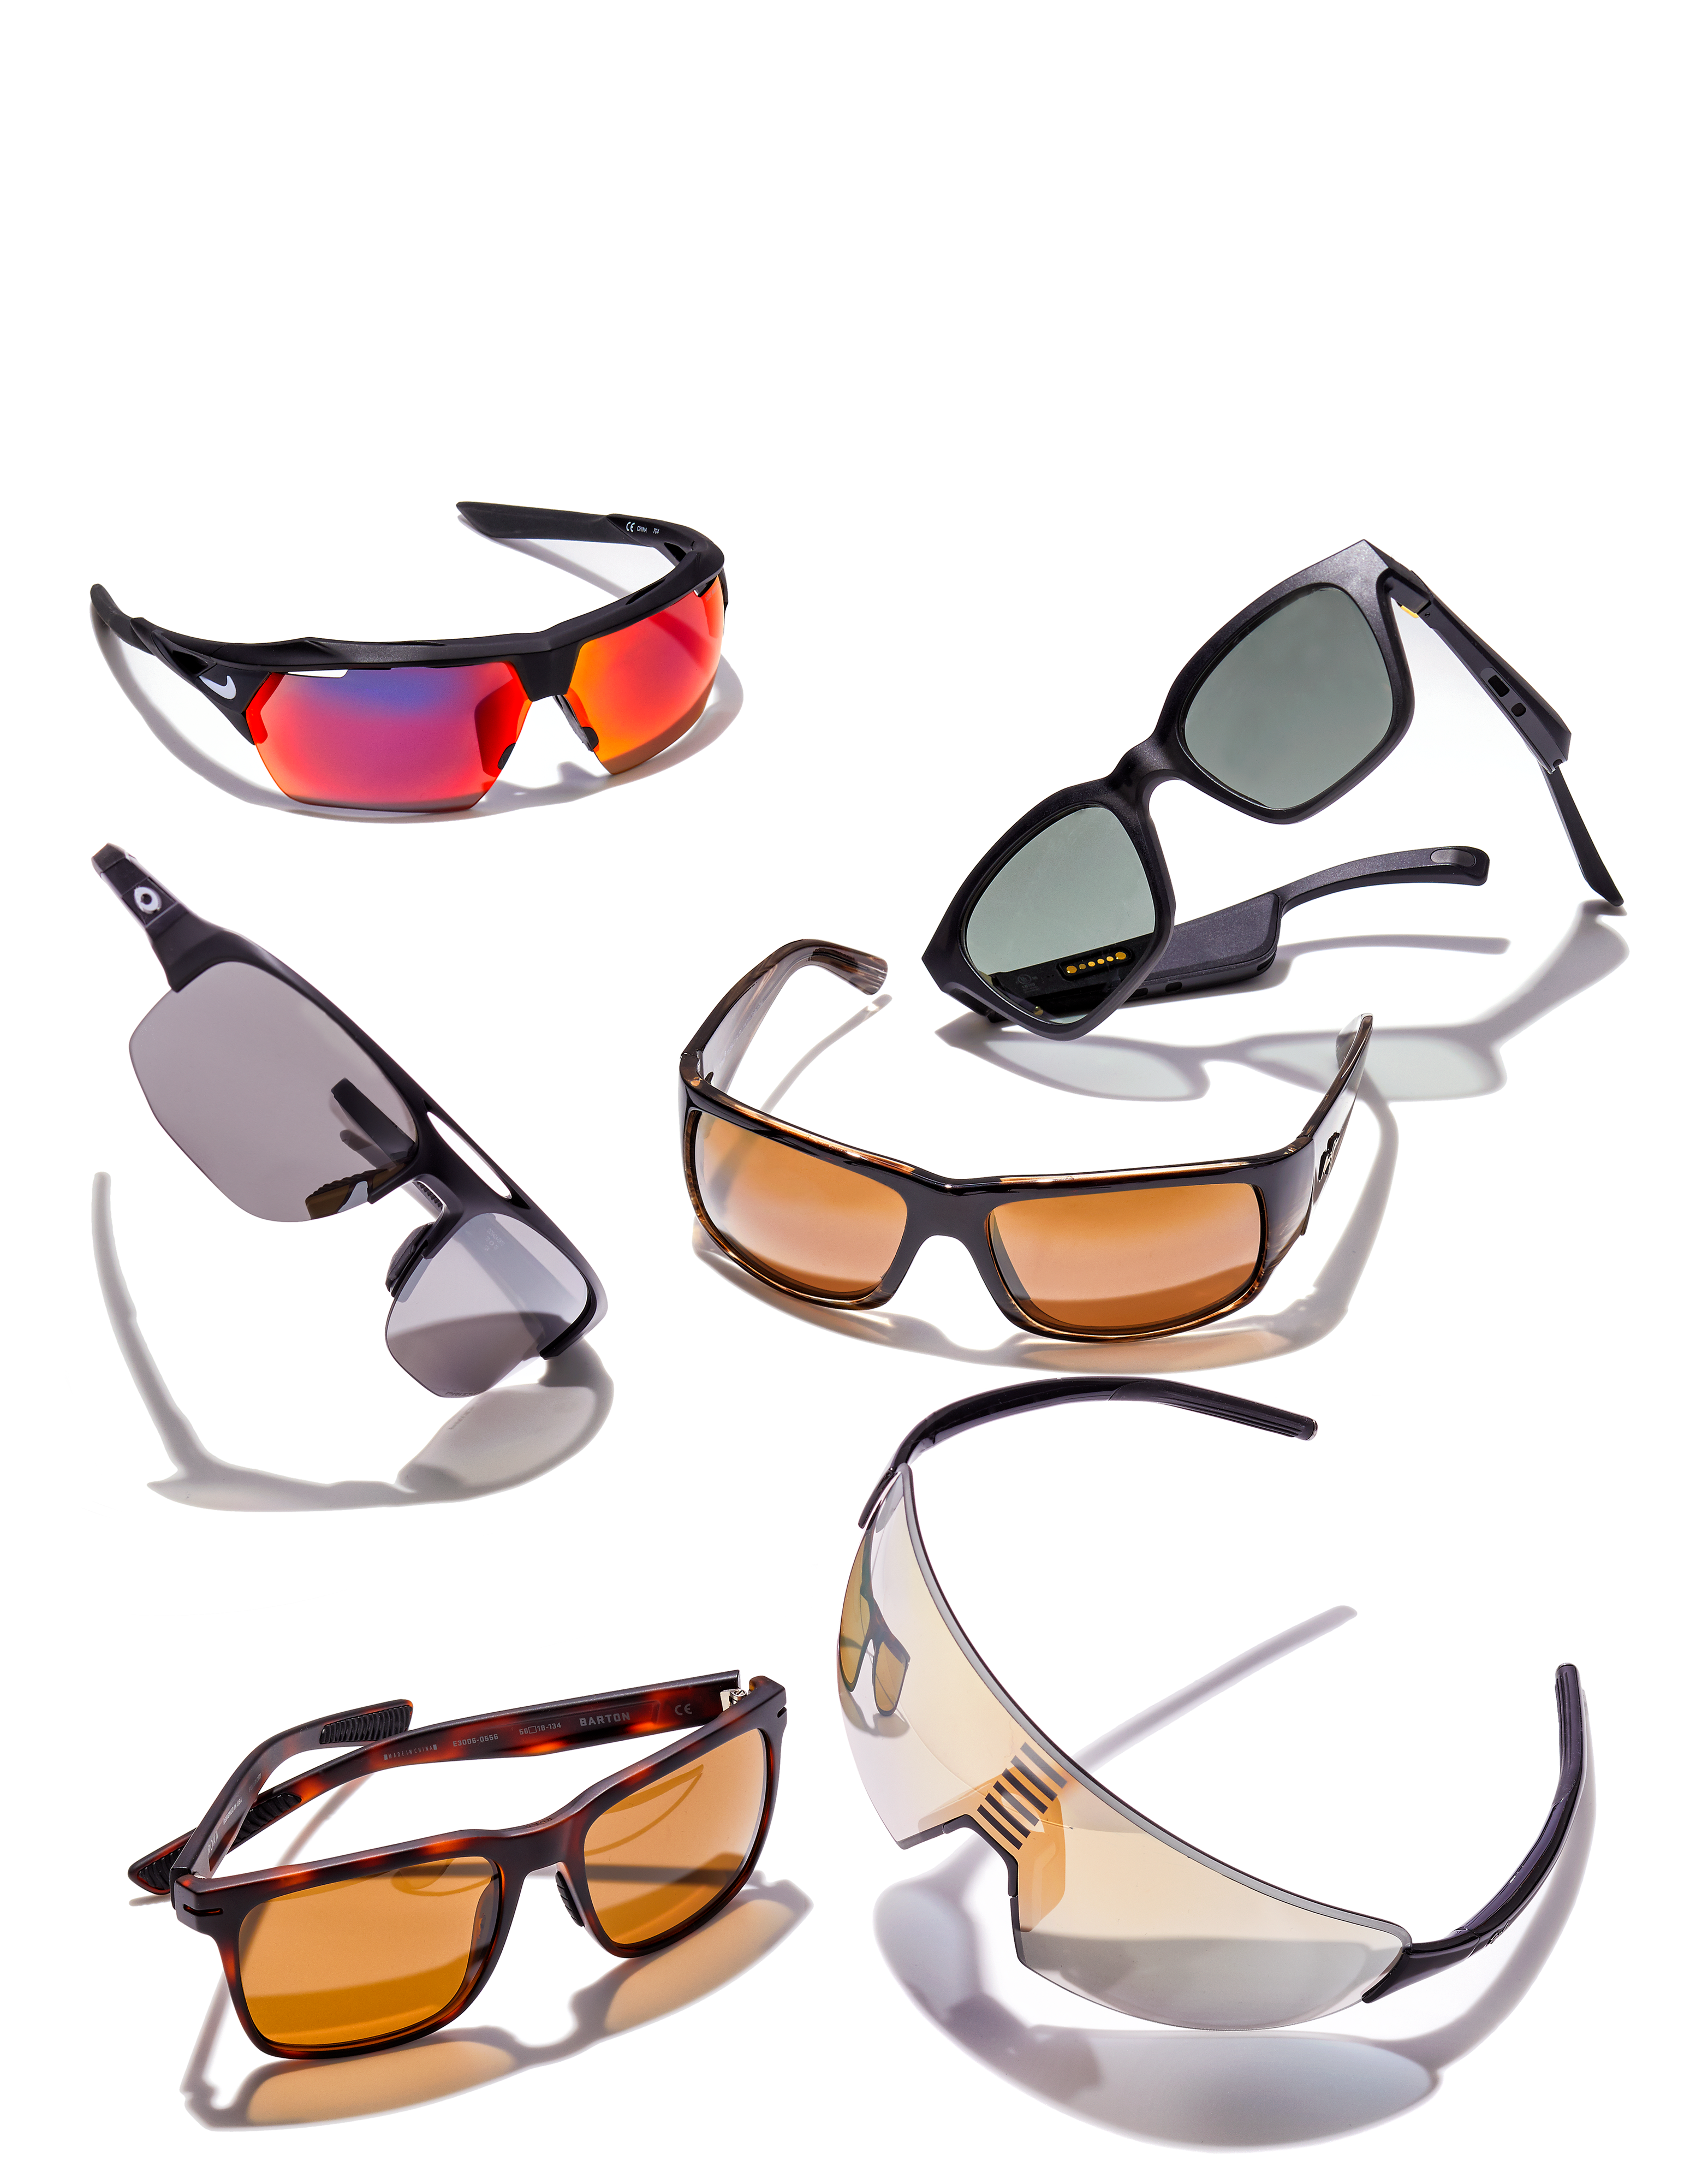 New X LOOP Mens Or Ladies Sport Sunglasses Wrap Cycling Running Summer Glasses 